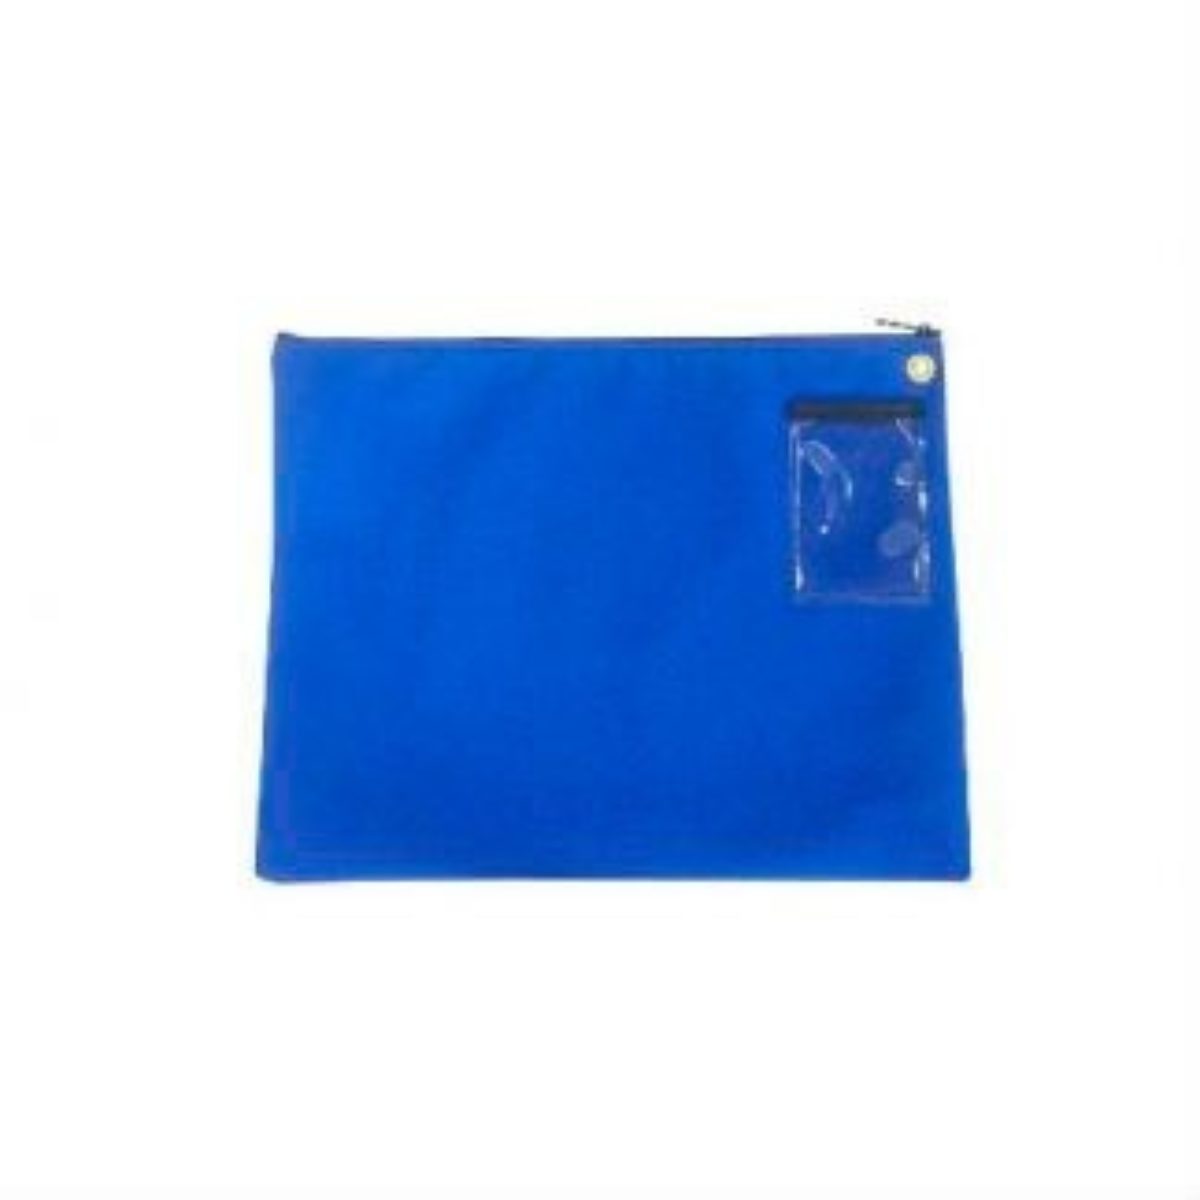 Interoffice Mailer Canvas Transit Sack Zipper Bag 18w x 14w Gray/Blue 